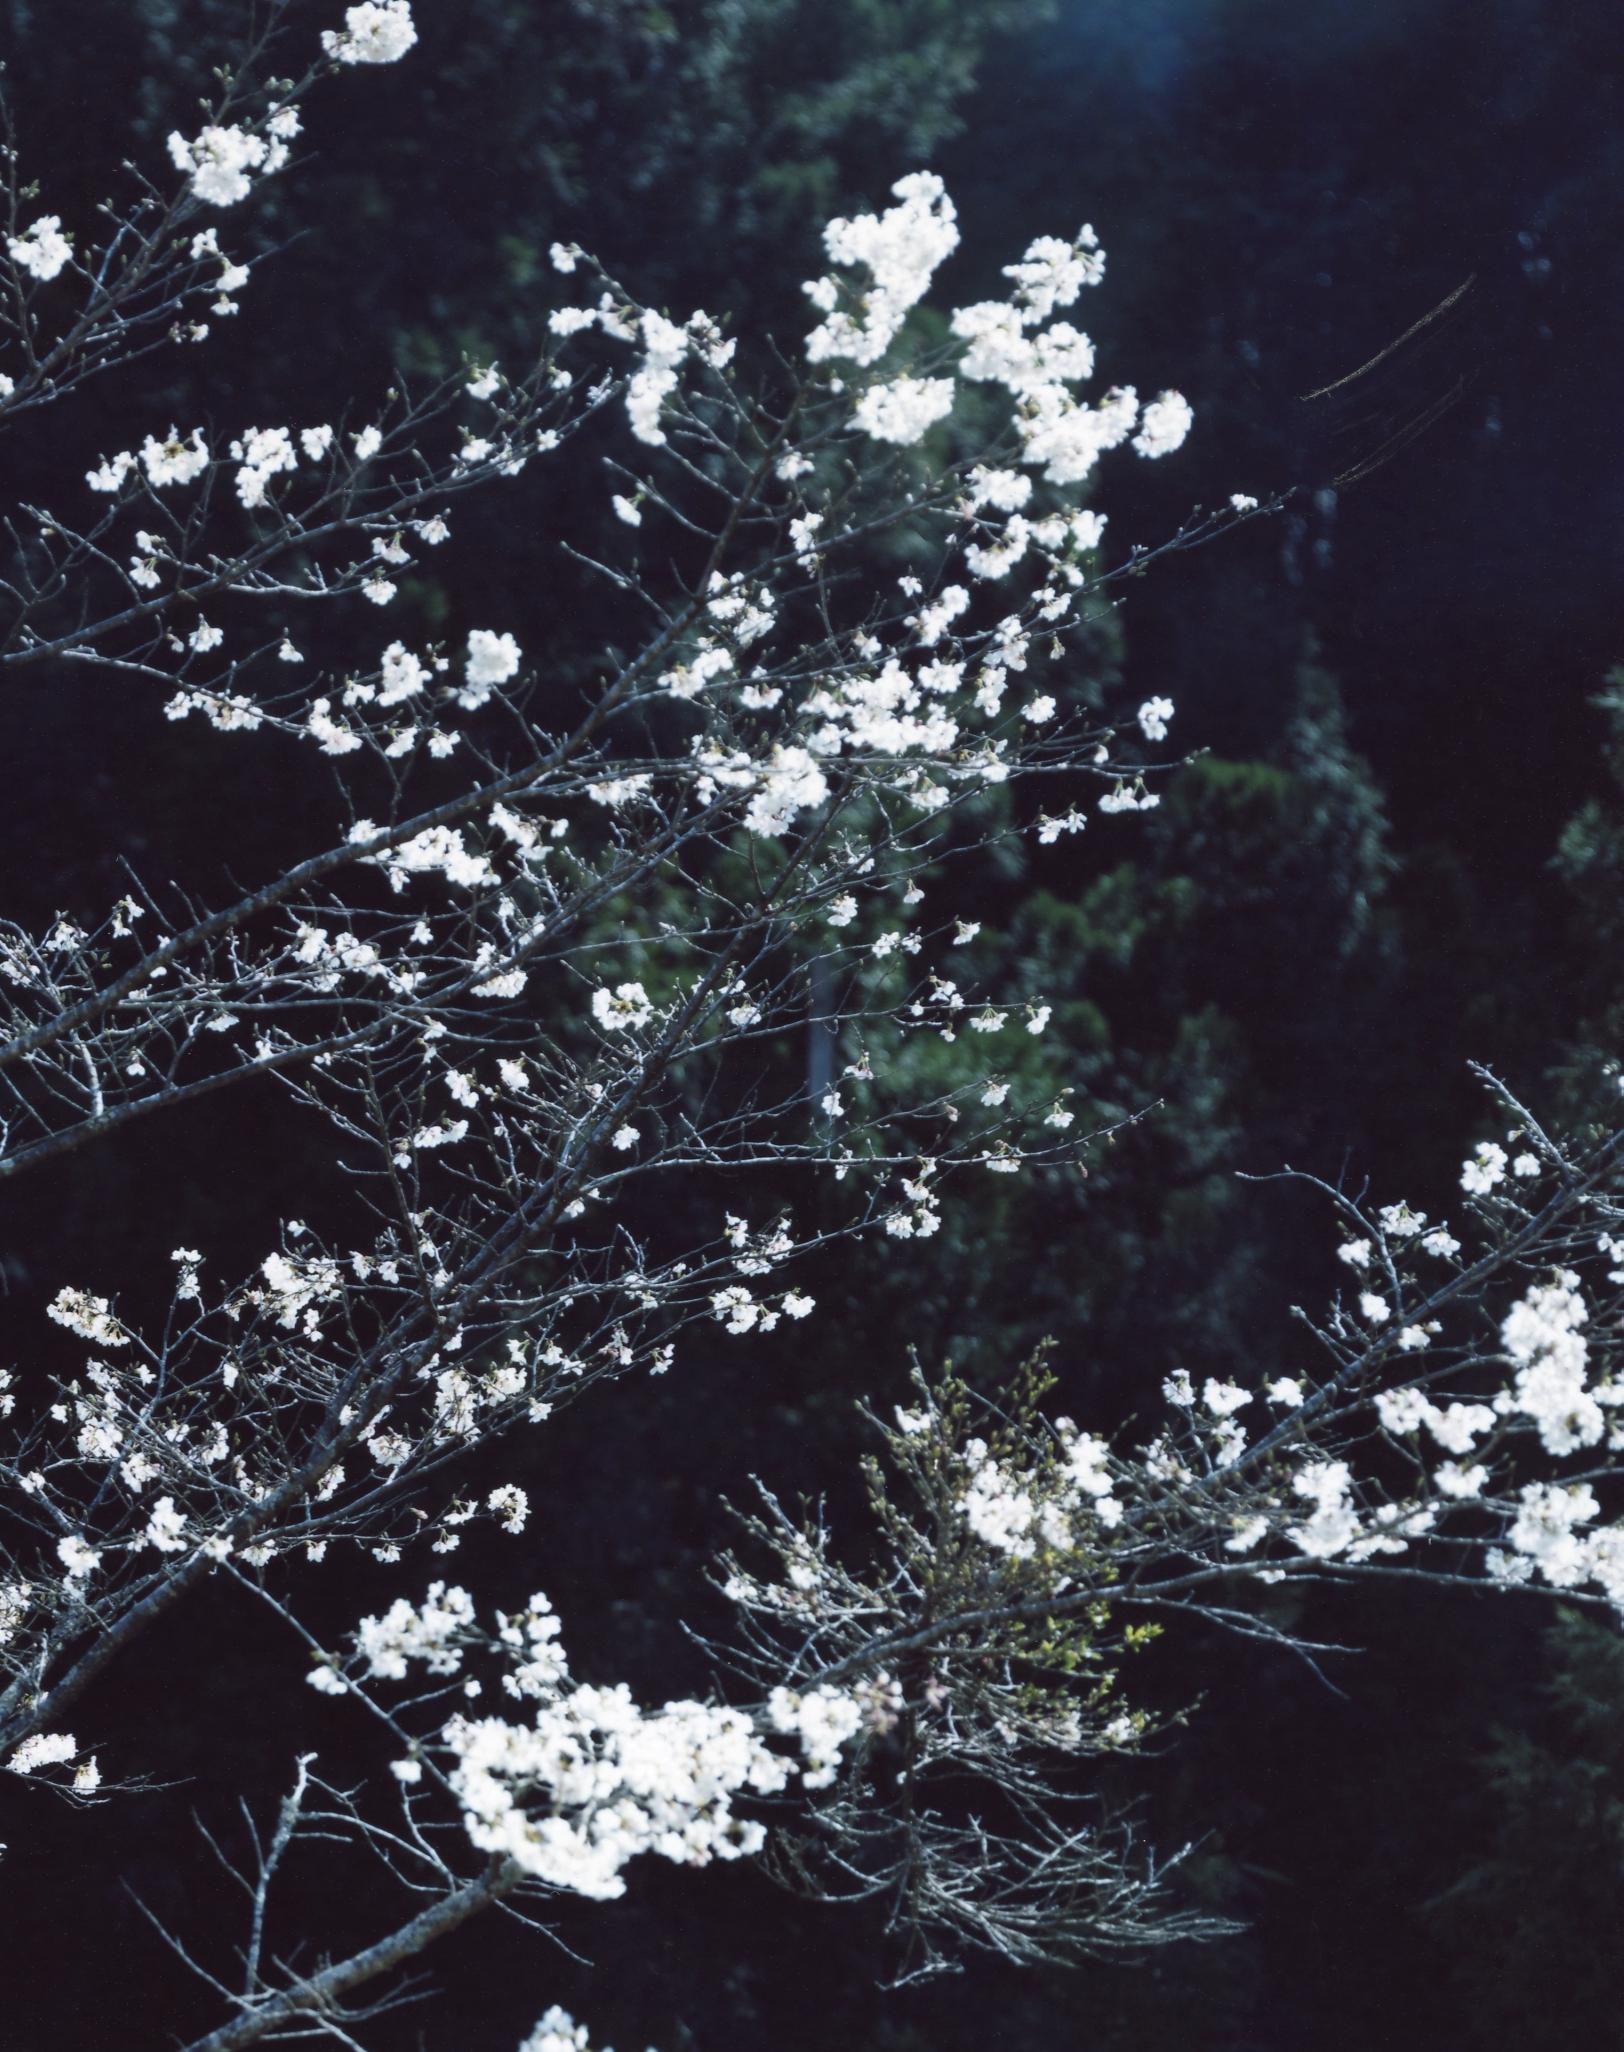 RISAKU SUZUKI (*1963, Japan)
SAKURA 13,4-152
2013
Chromogenic print
Sheet 120 x 155 cm (47 1/4 x 61 in.)
Edition of 5; Ed. no. 3/5
Framed

The Sakura (Japanese term for ‘cherry blossoms’) Celebration commences in early spring and has inspired